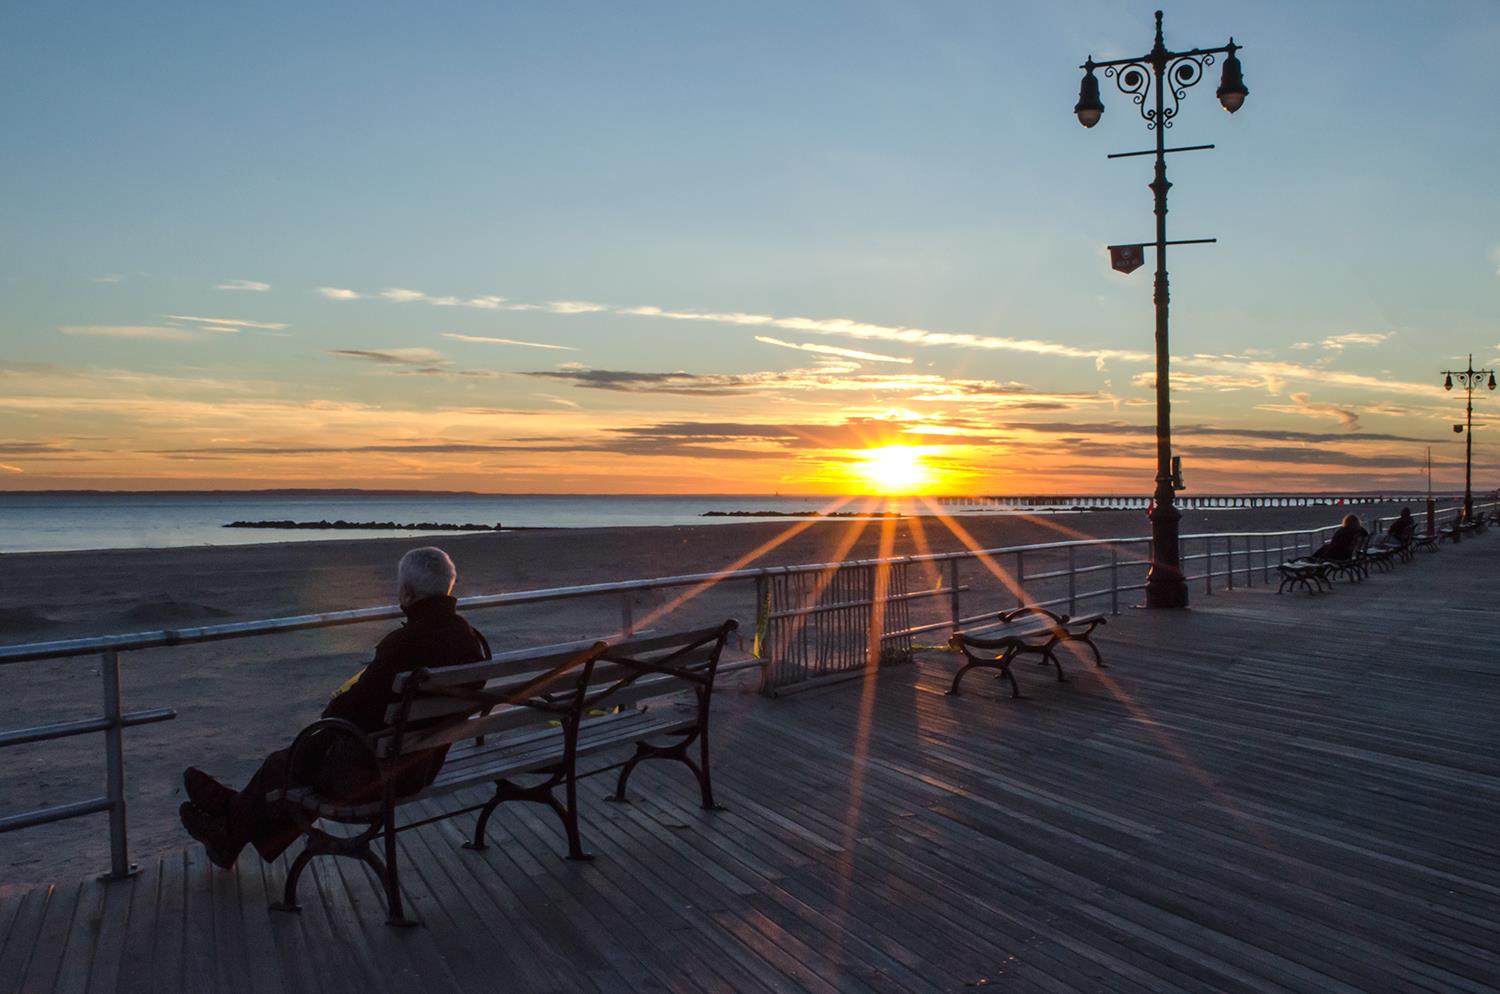 Landmarks Preservation Commission May Reconsider Bid To Make Coney Island Boardwalk A Scenic Landmark